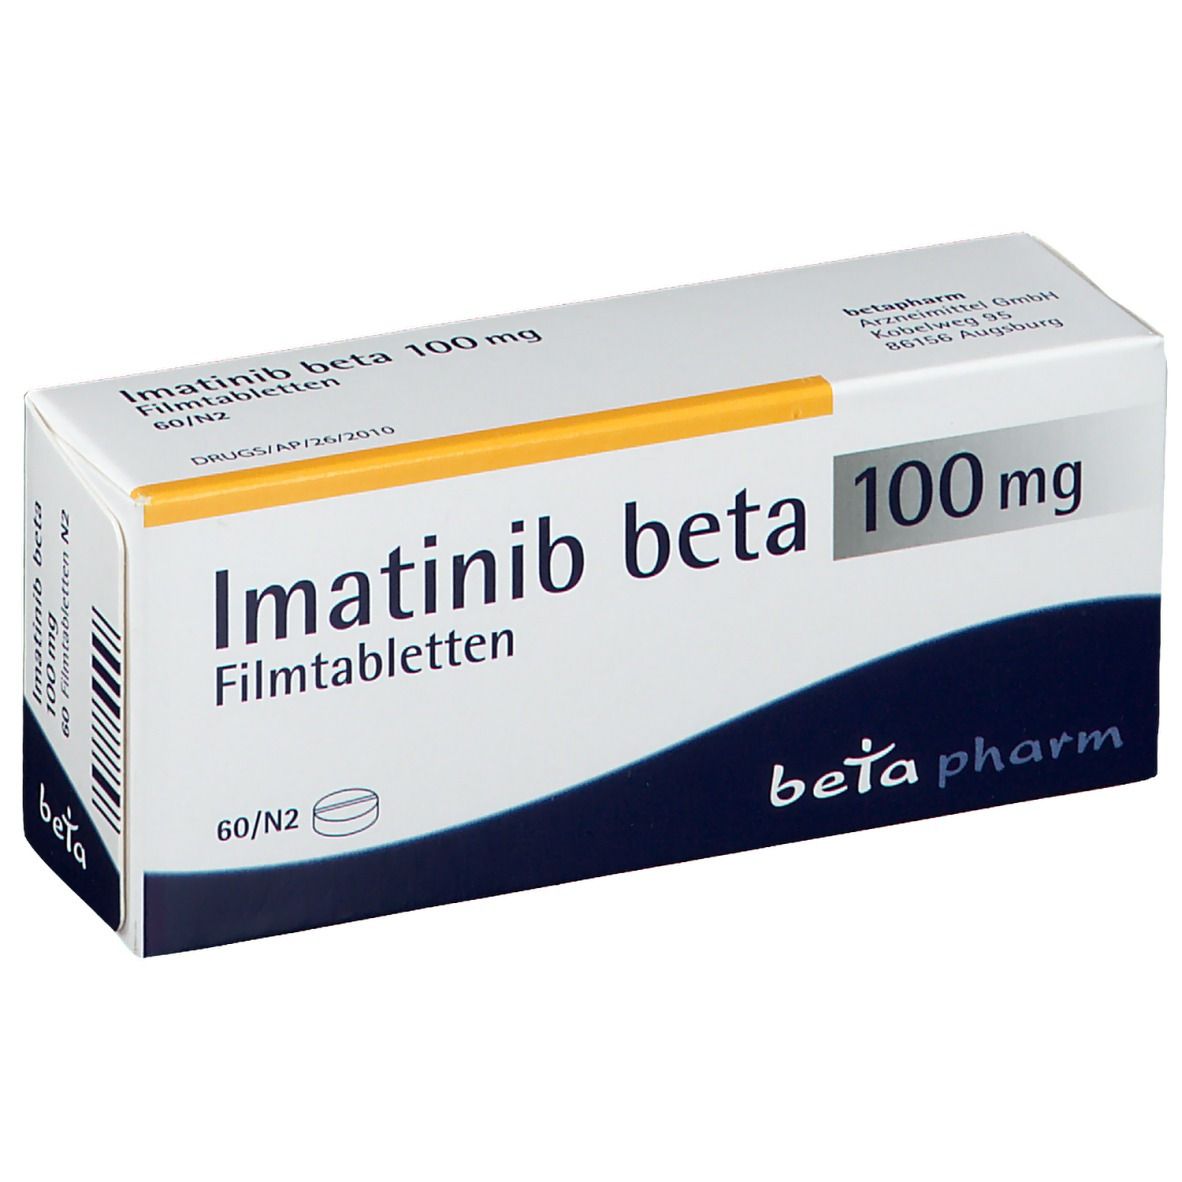 Imatinib beta 100 mg